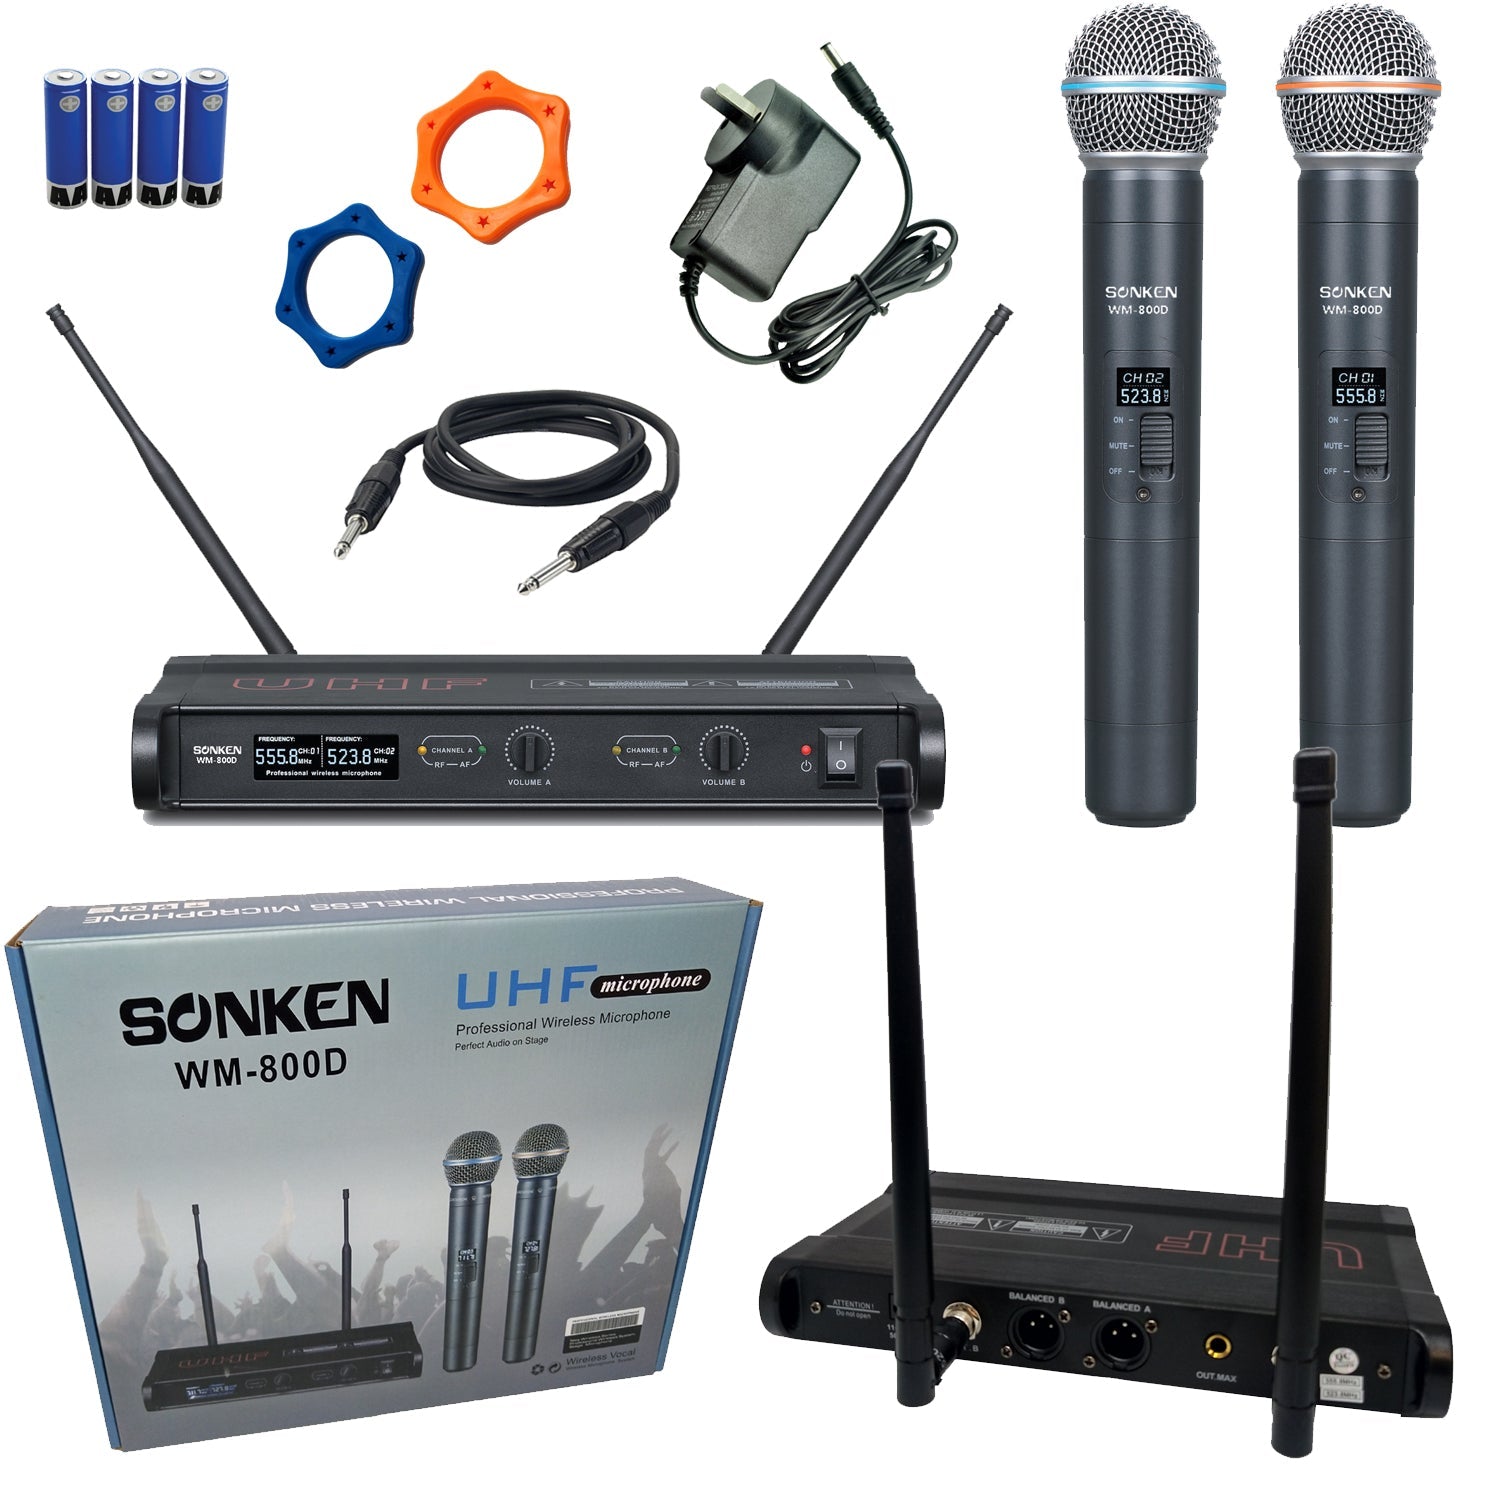 Sonken Home Karaoke Studio Package Deal (SA-710 Amp + CS-612 (12") Speakers + WM-800D Wireless Mics) - Karaoke Home Entertainment